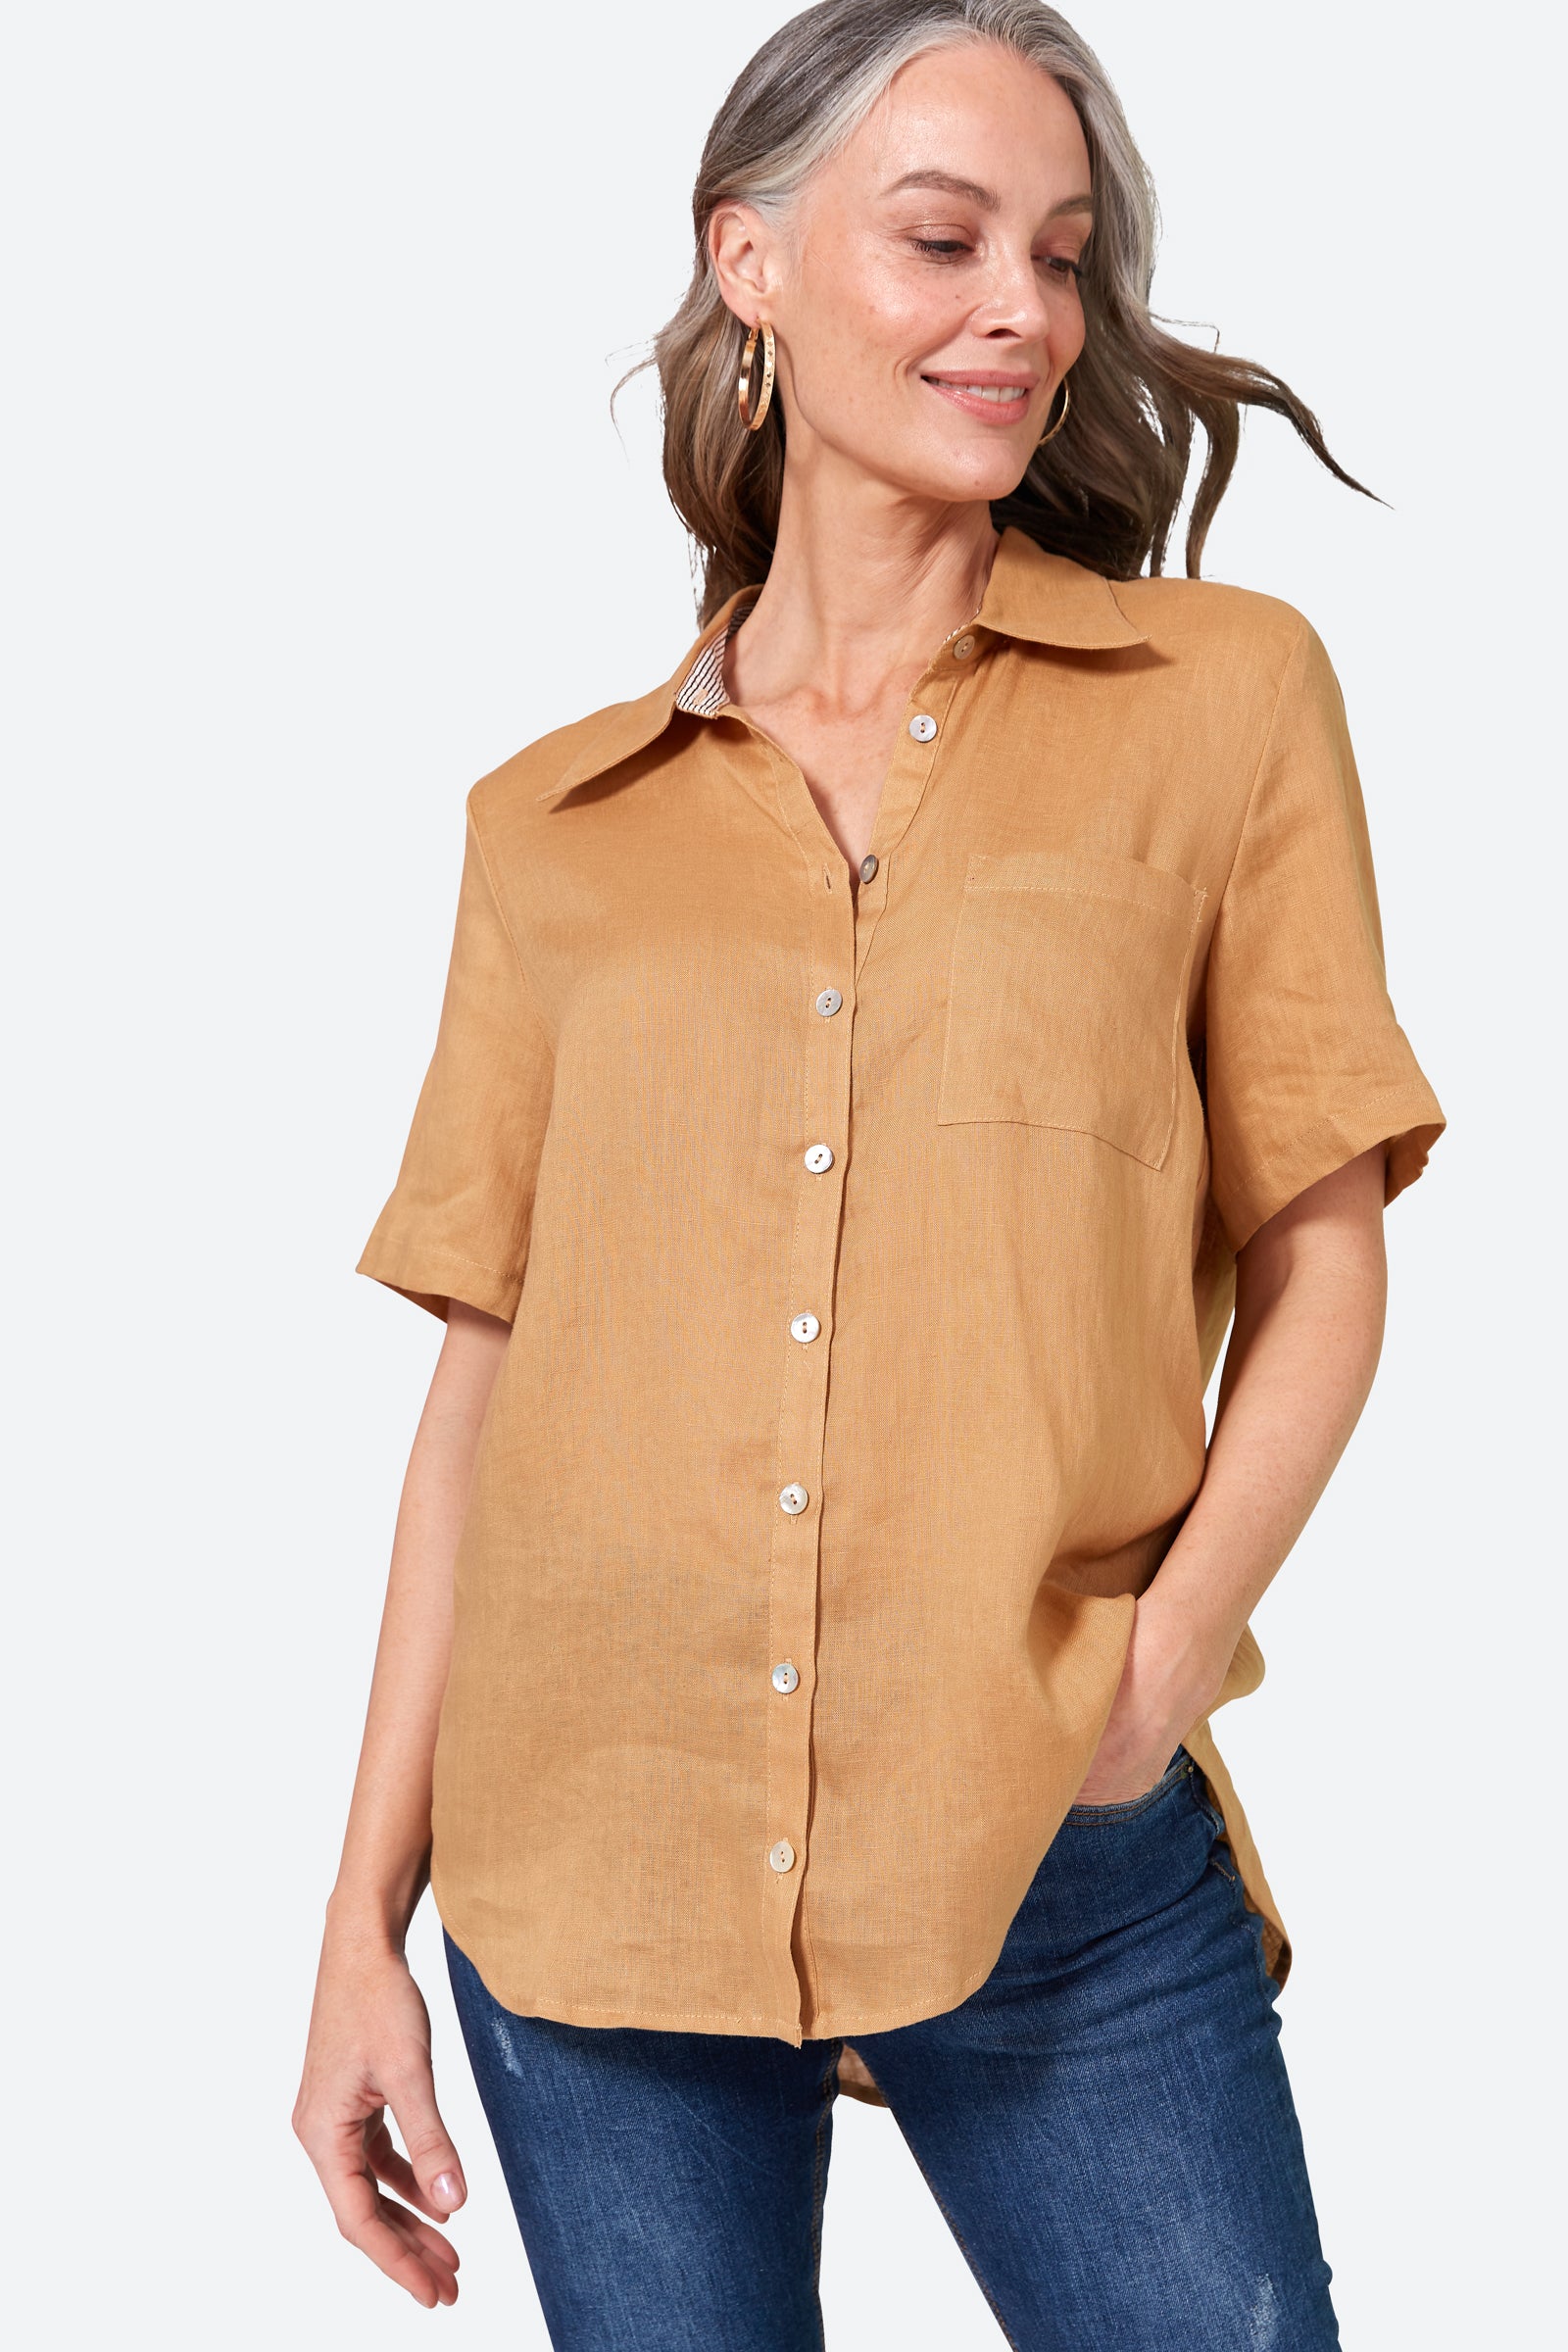 La Vie Shirt - Caramel - eb&ive Clothing - Shirt S/S Linen